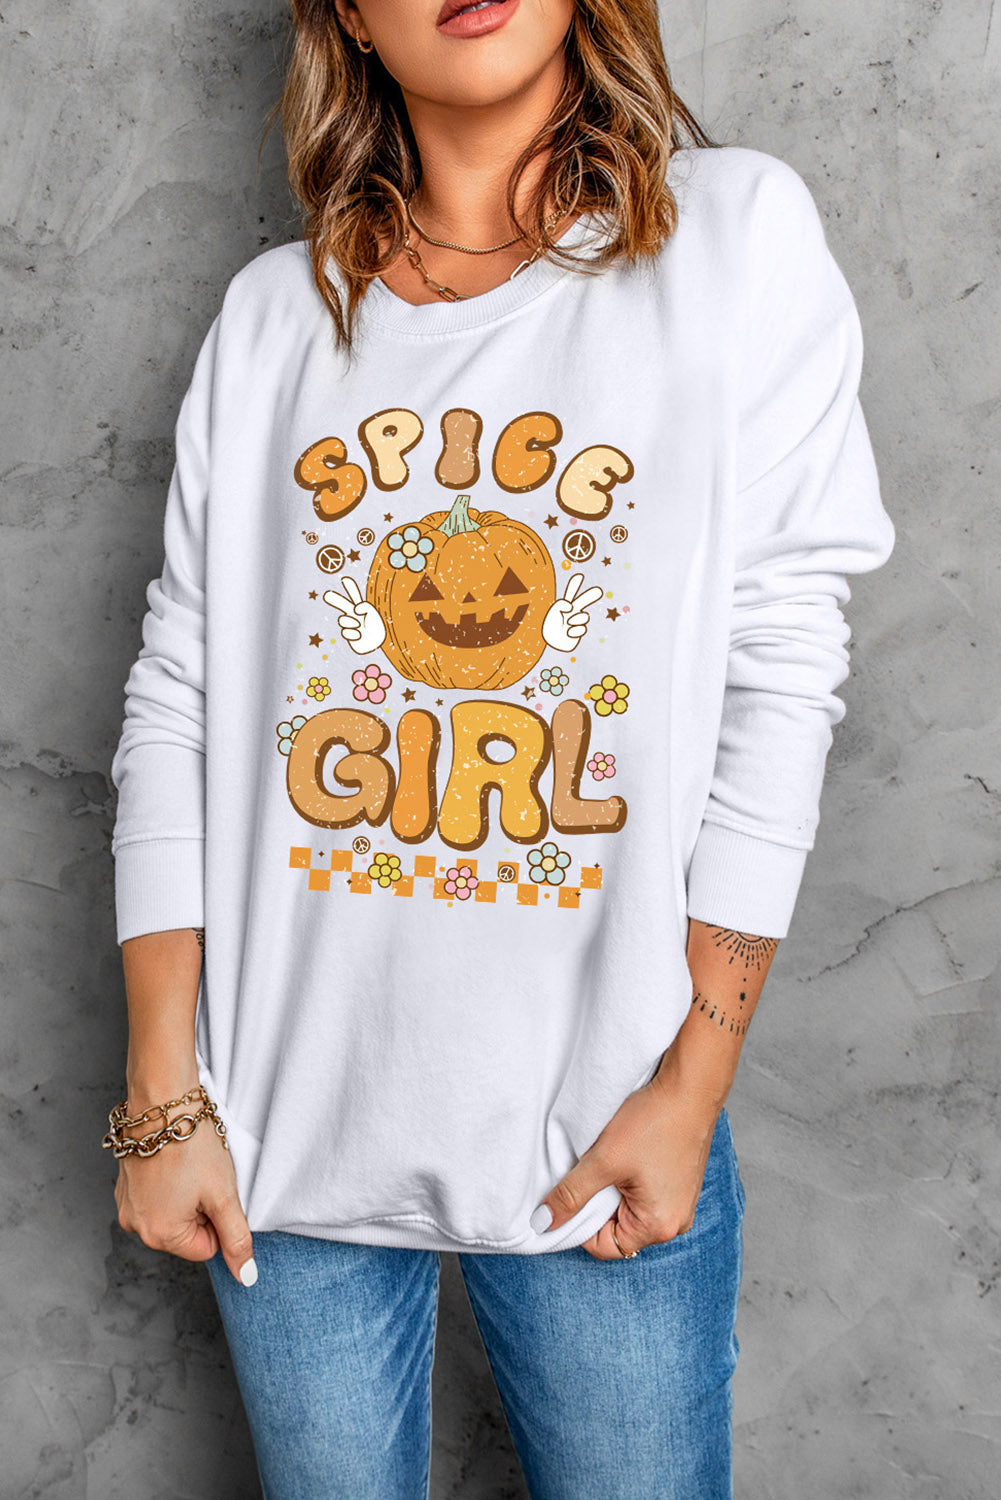 SPICE GIRL Graphic Sweatshirt